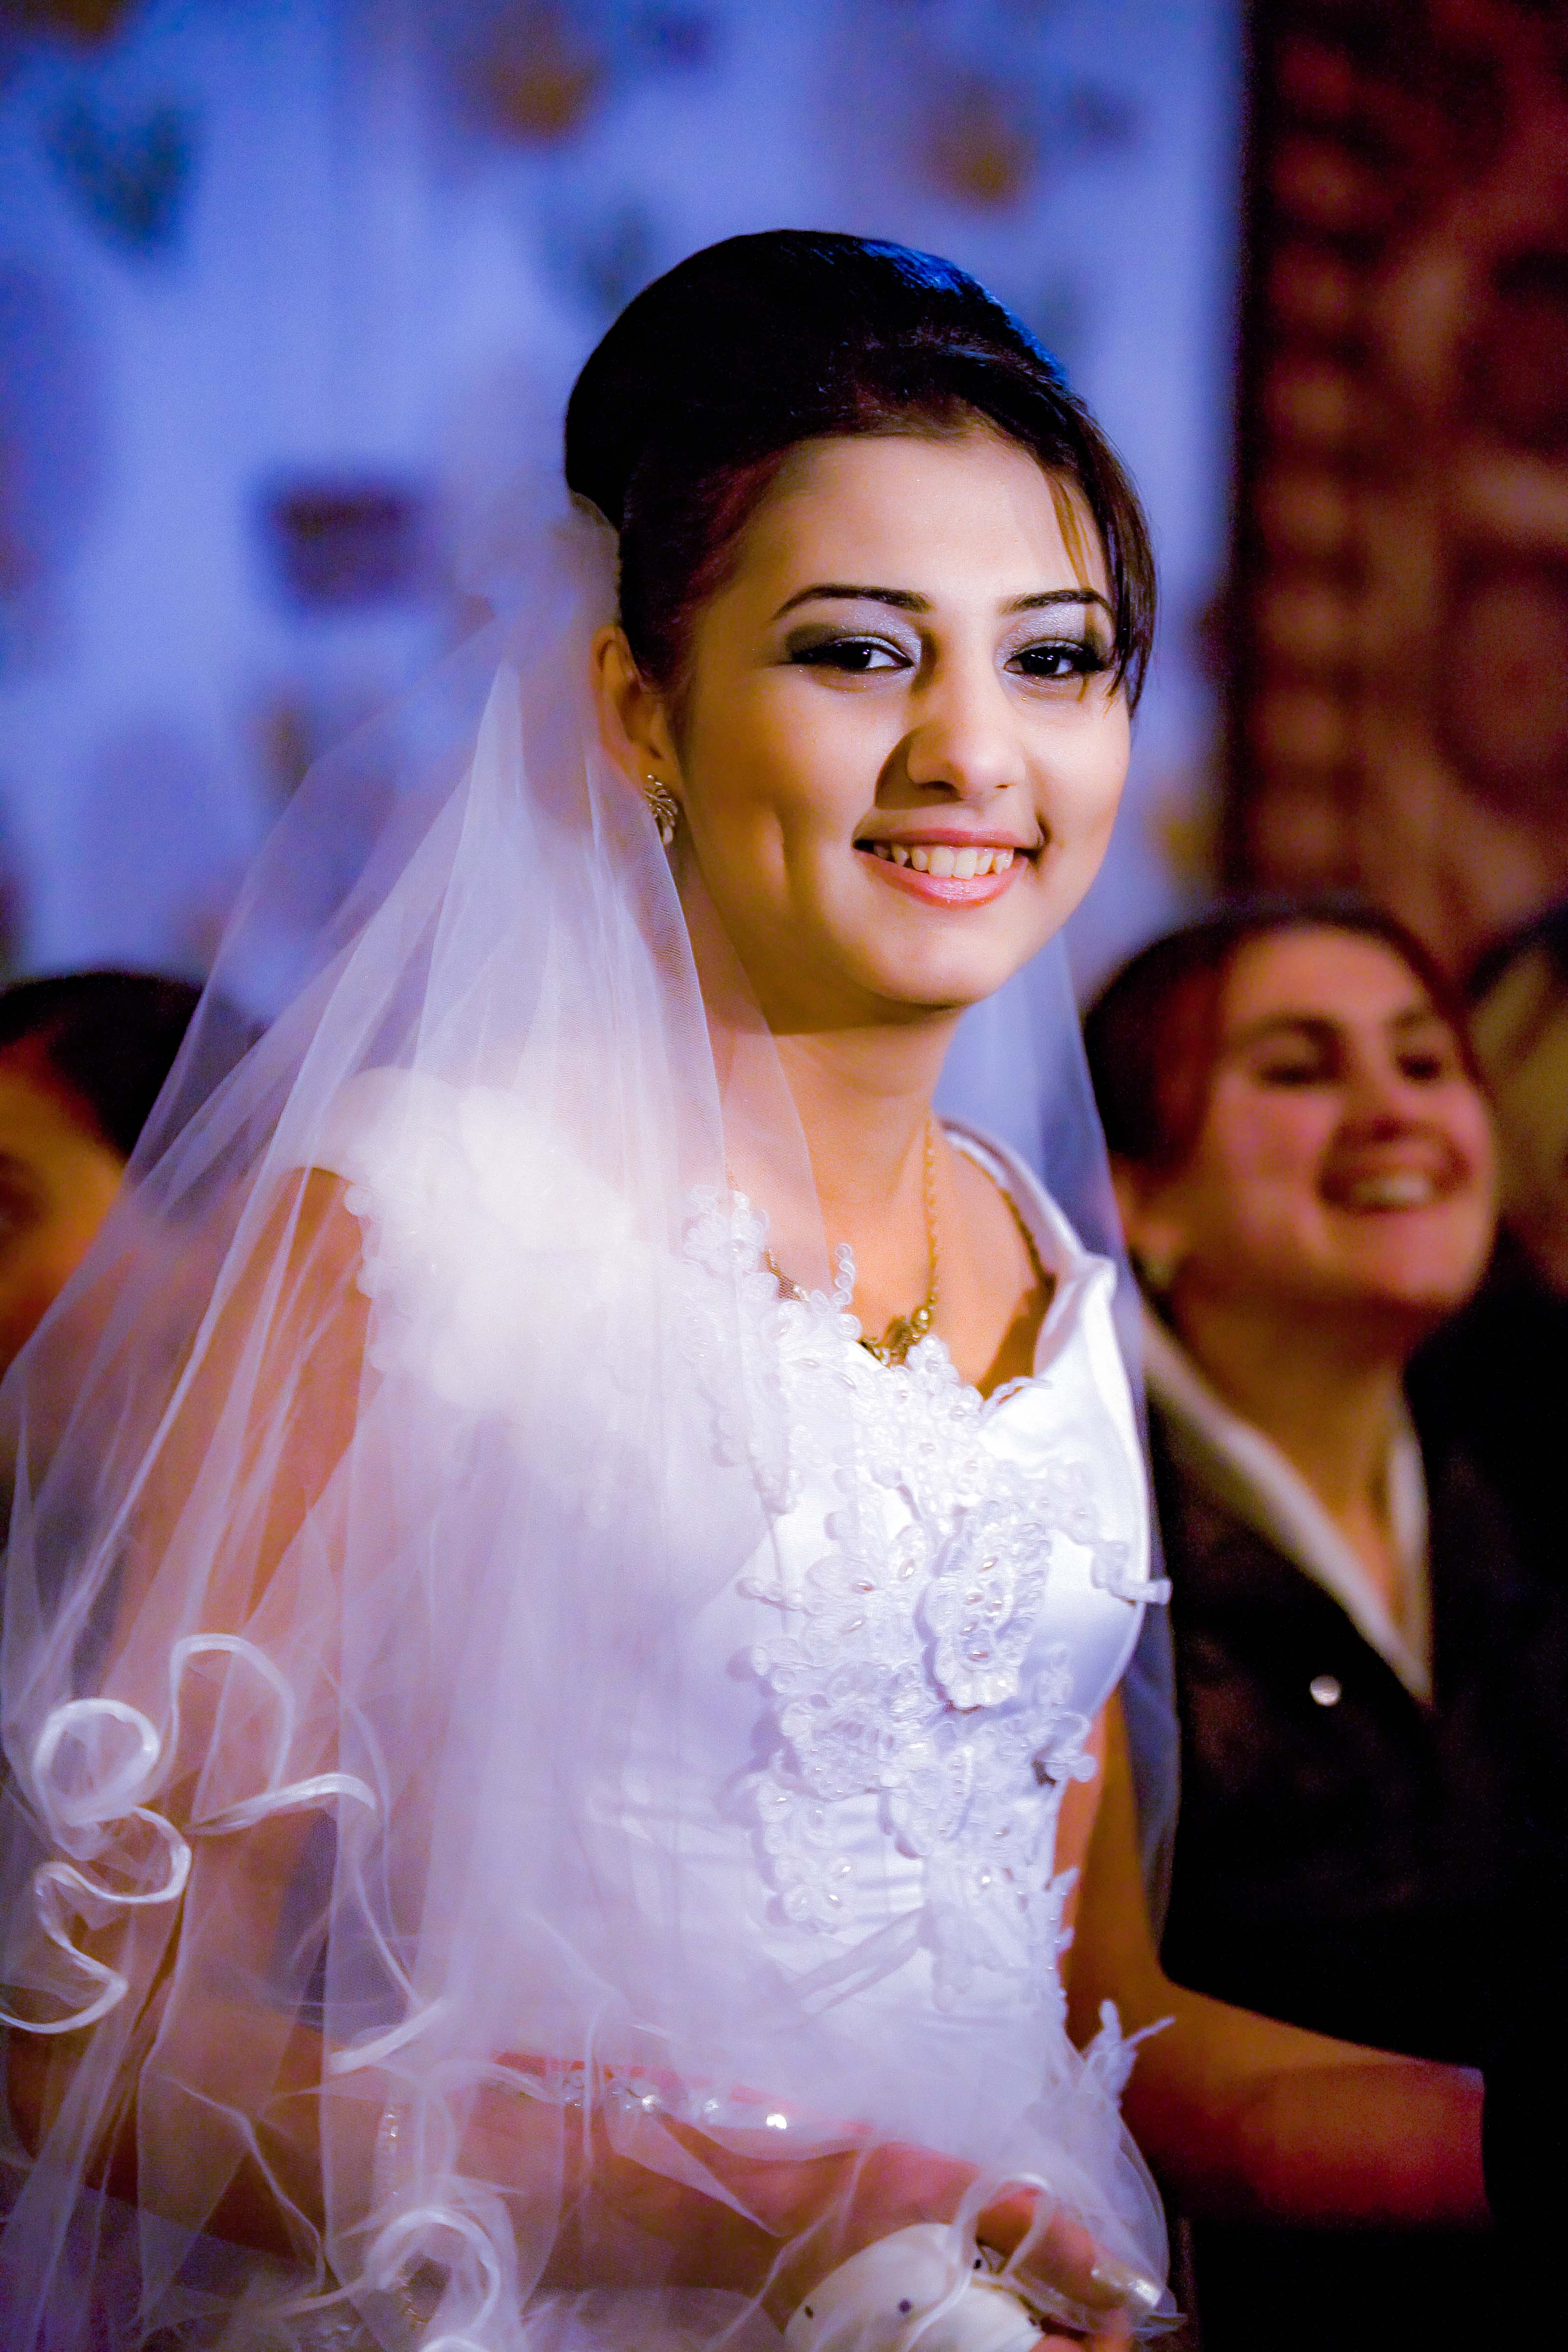 Azerbaijan, Gadabay Prov, Bride, 2009, IMG 8955